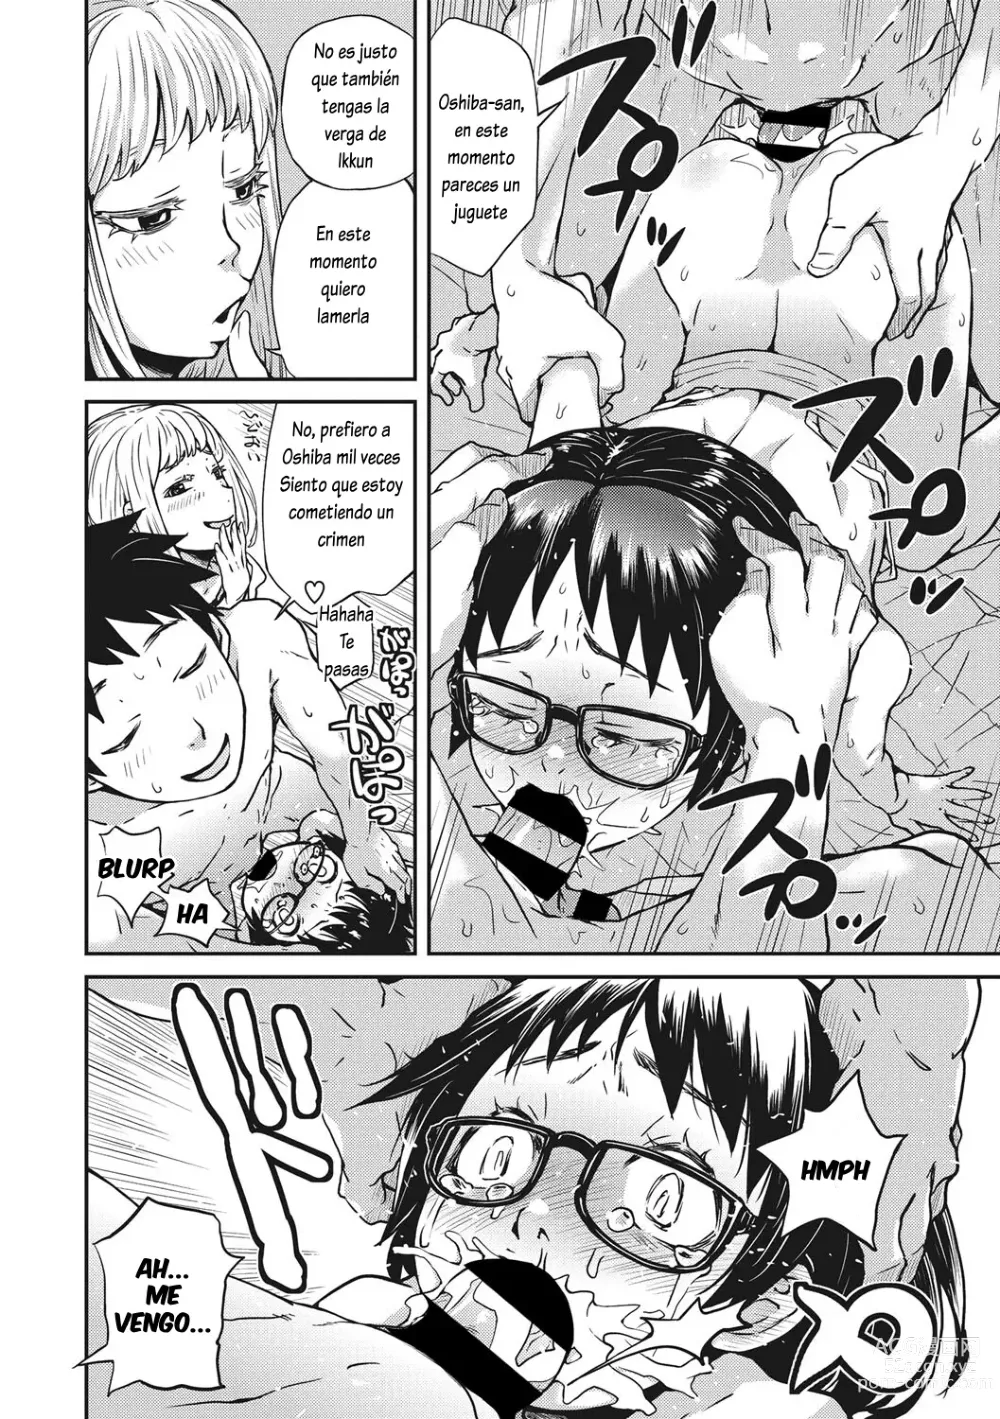 Page 6 of manga Oshiete Ooshiba-san Kouhen